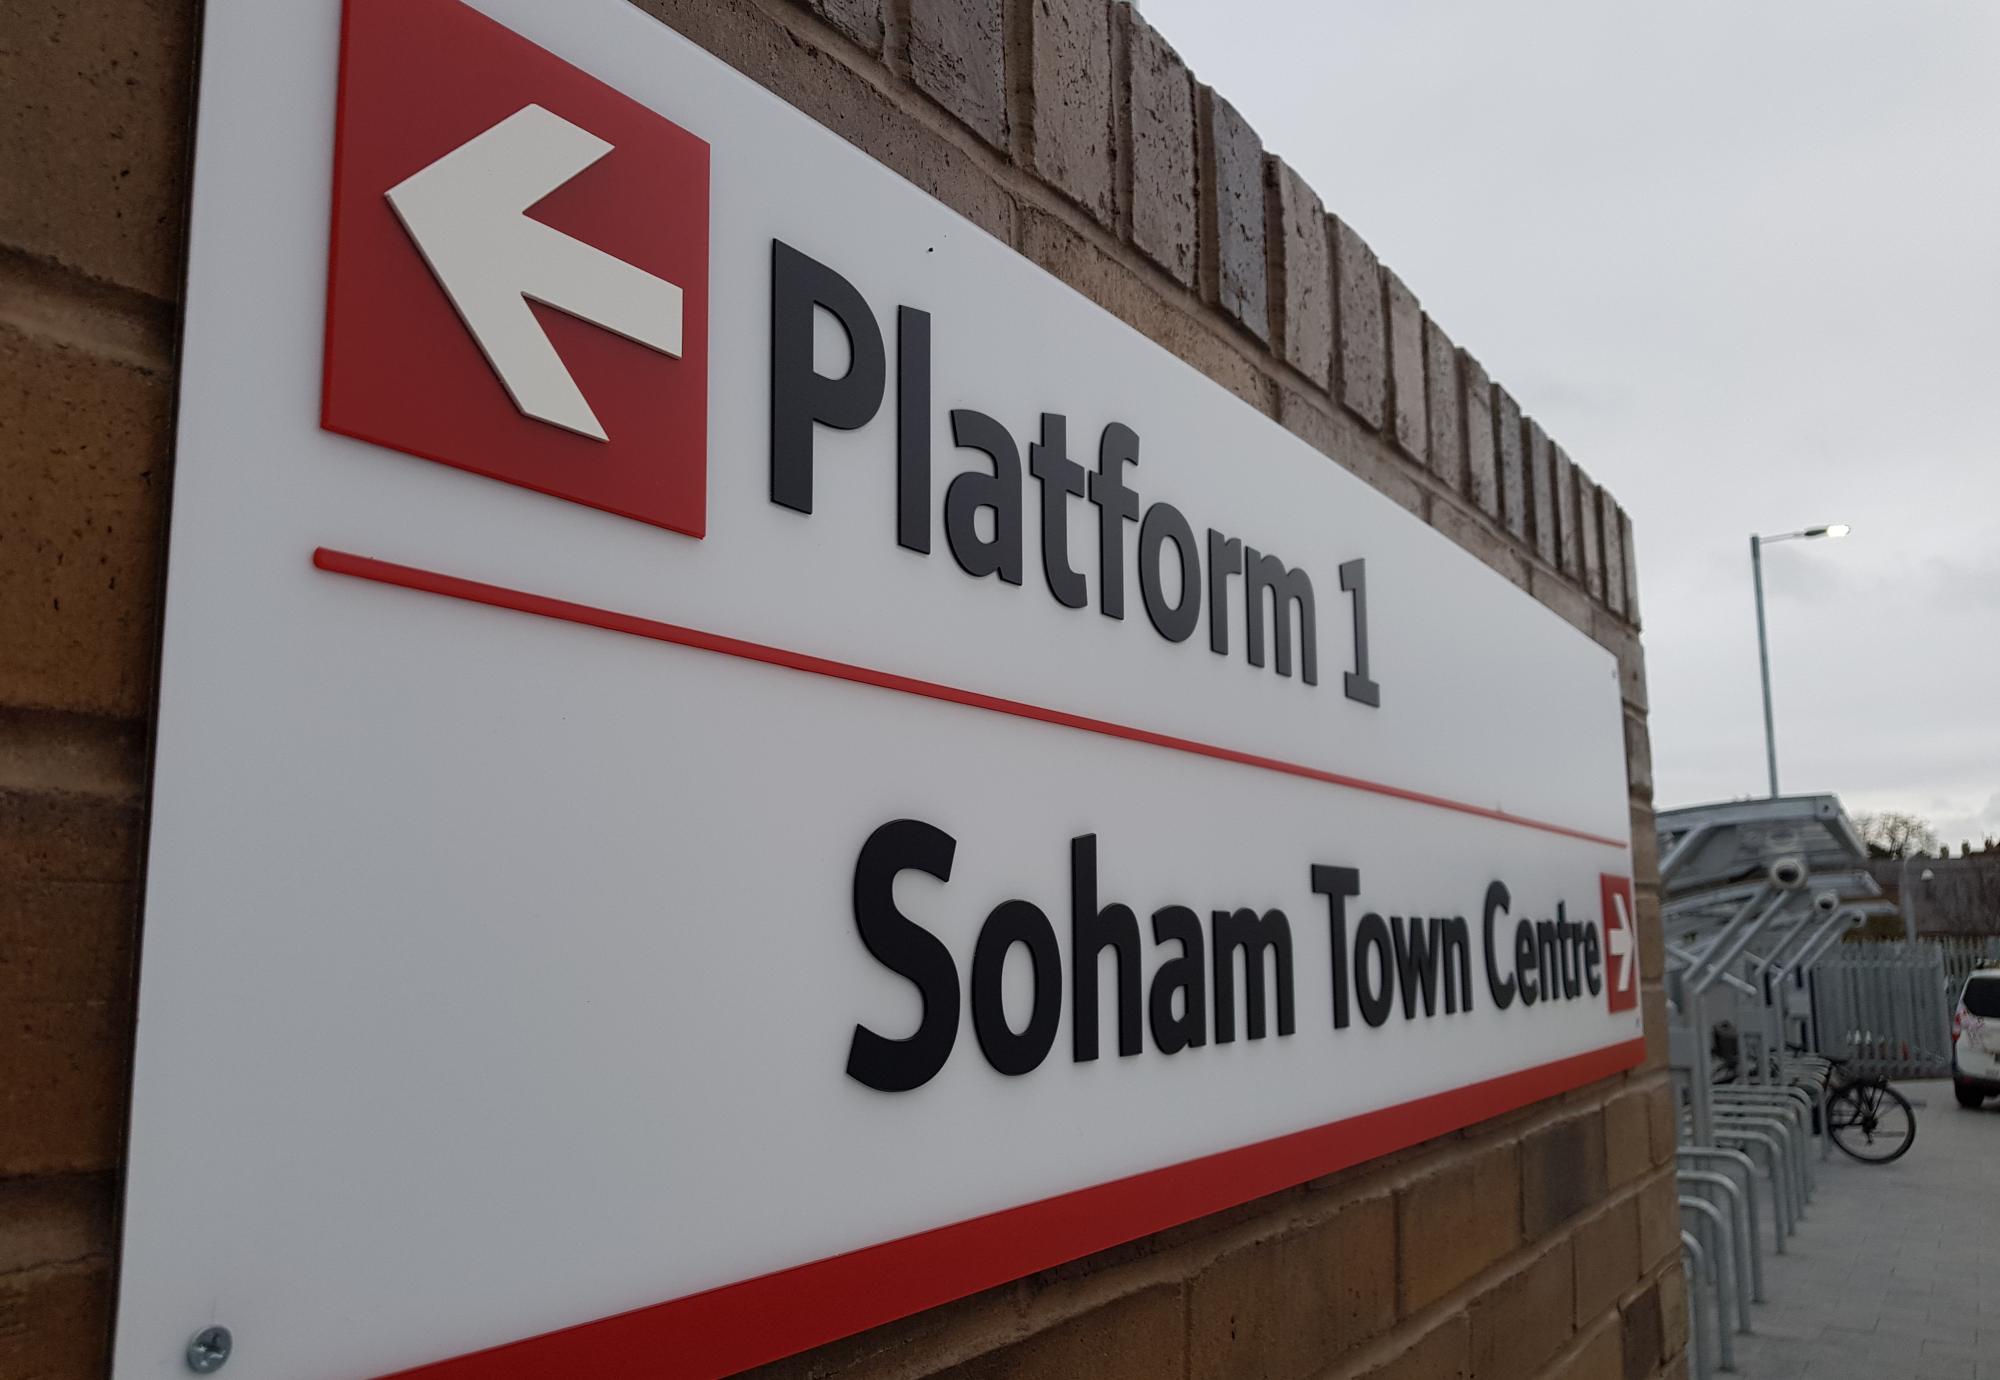 Soham station, via Greater Anglia 